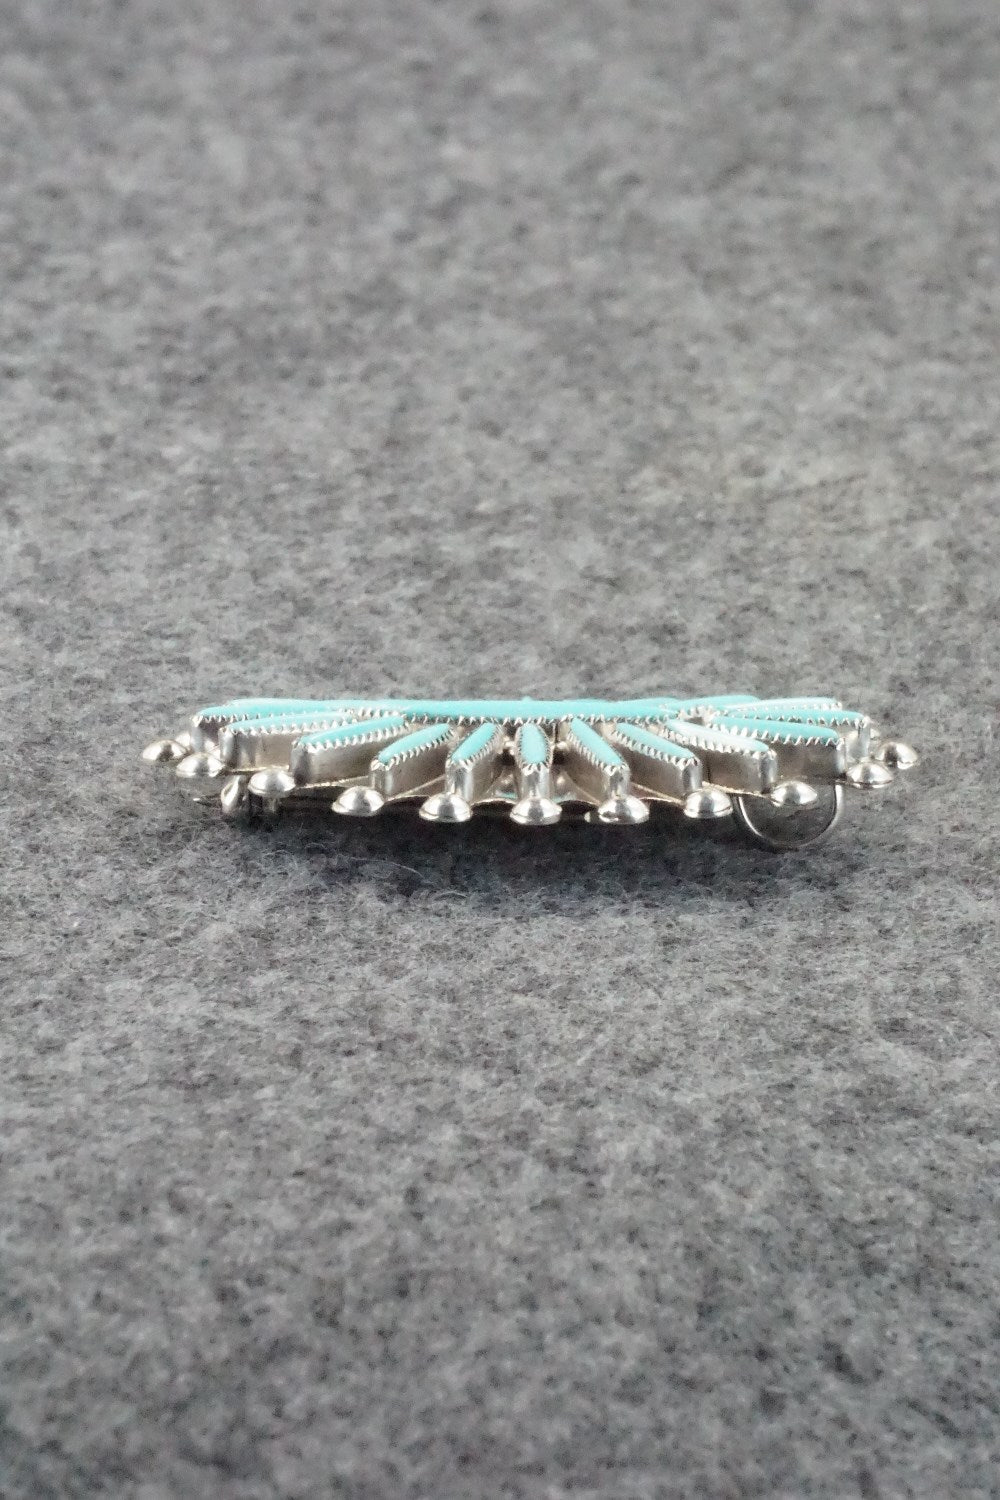 Turquoise & Sterling Silver Pendant/ Pin - Lance Waatsa